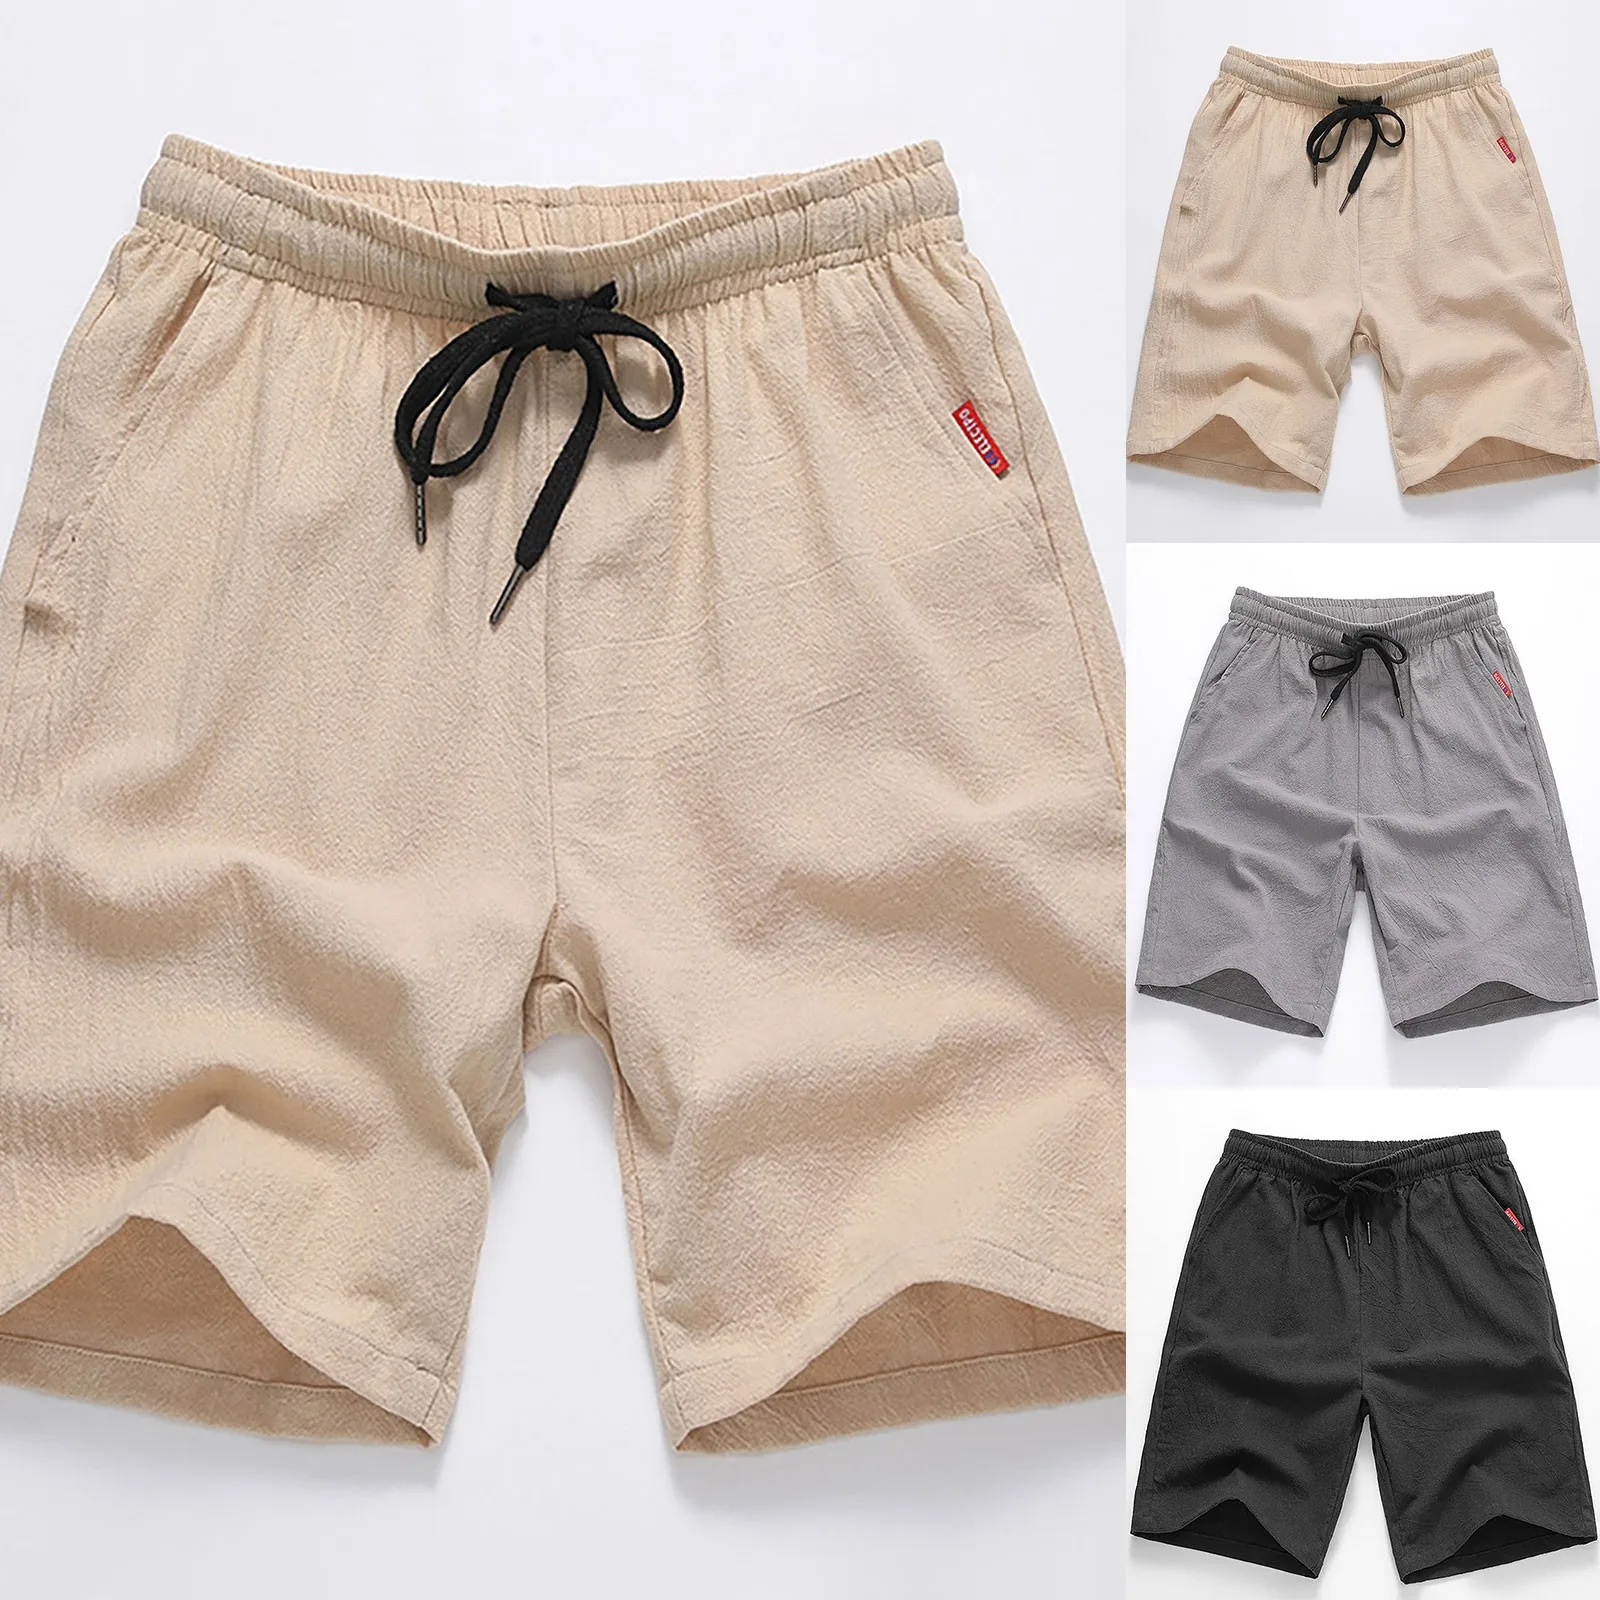 Lanyard Pocket Solid Color Casual Shorts Men Light Casual Cotton Linen Beach Shorts Gym Sweatpants Man Clothing 2021 Summer#3